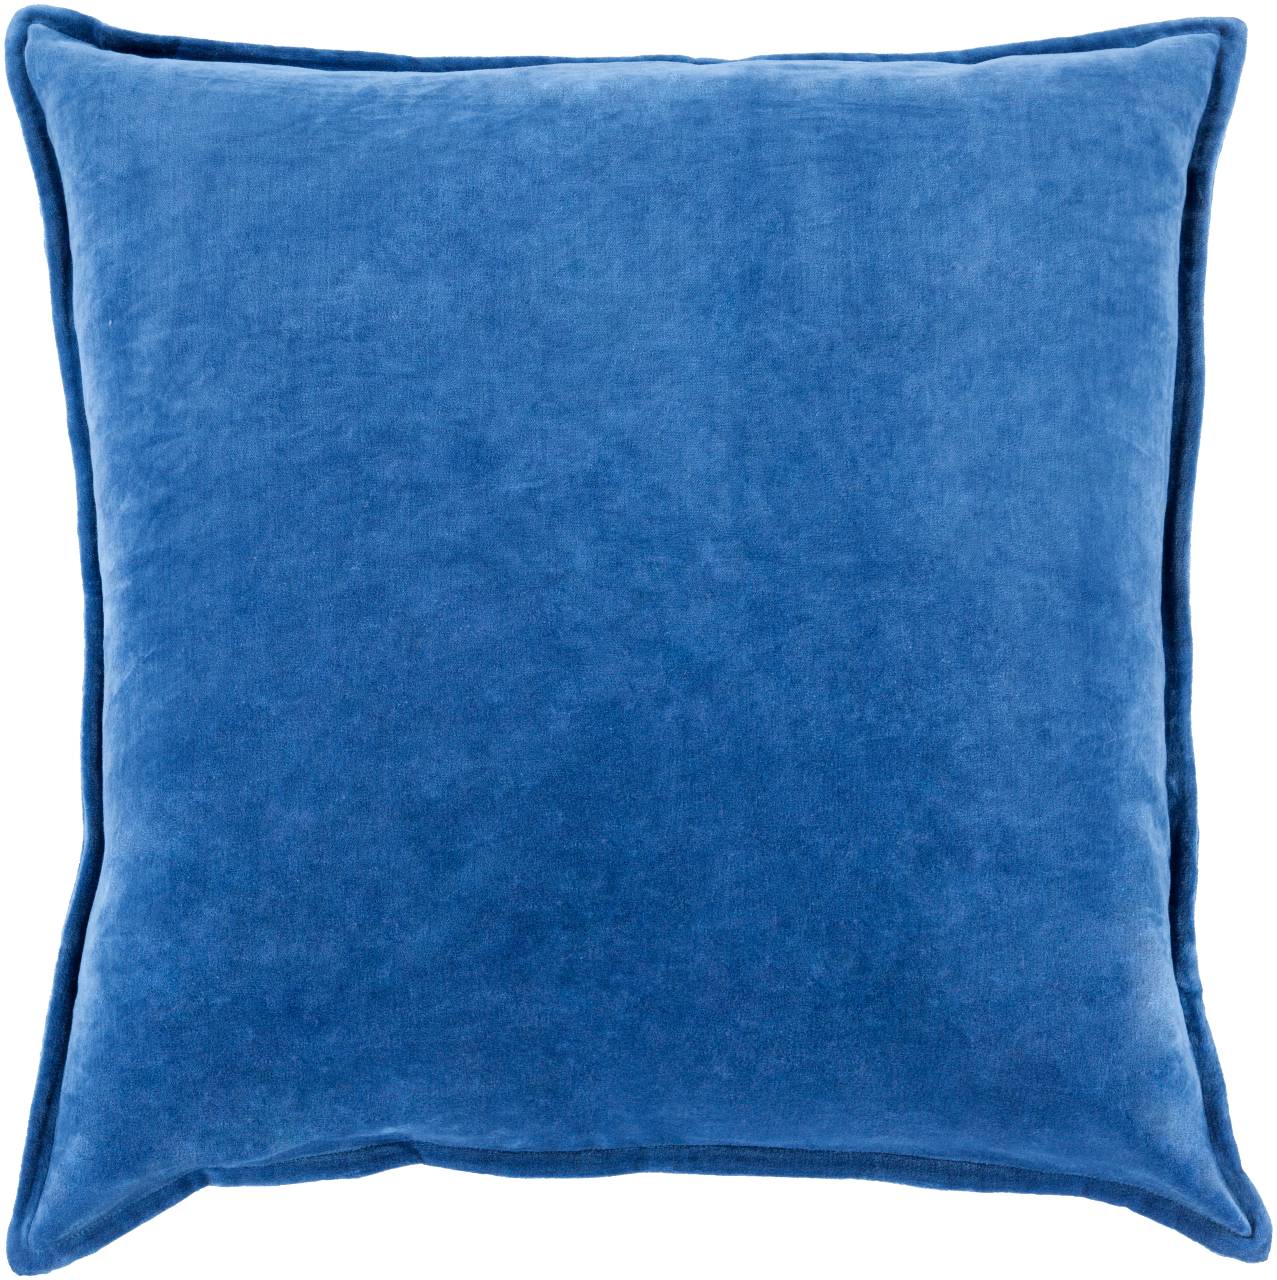 Merchtem Dark Blue Pillow Cover